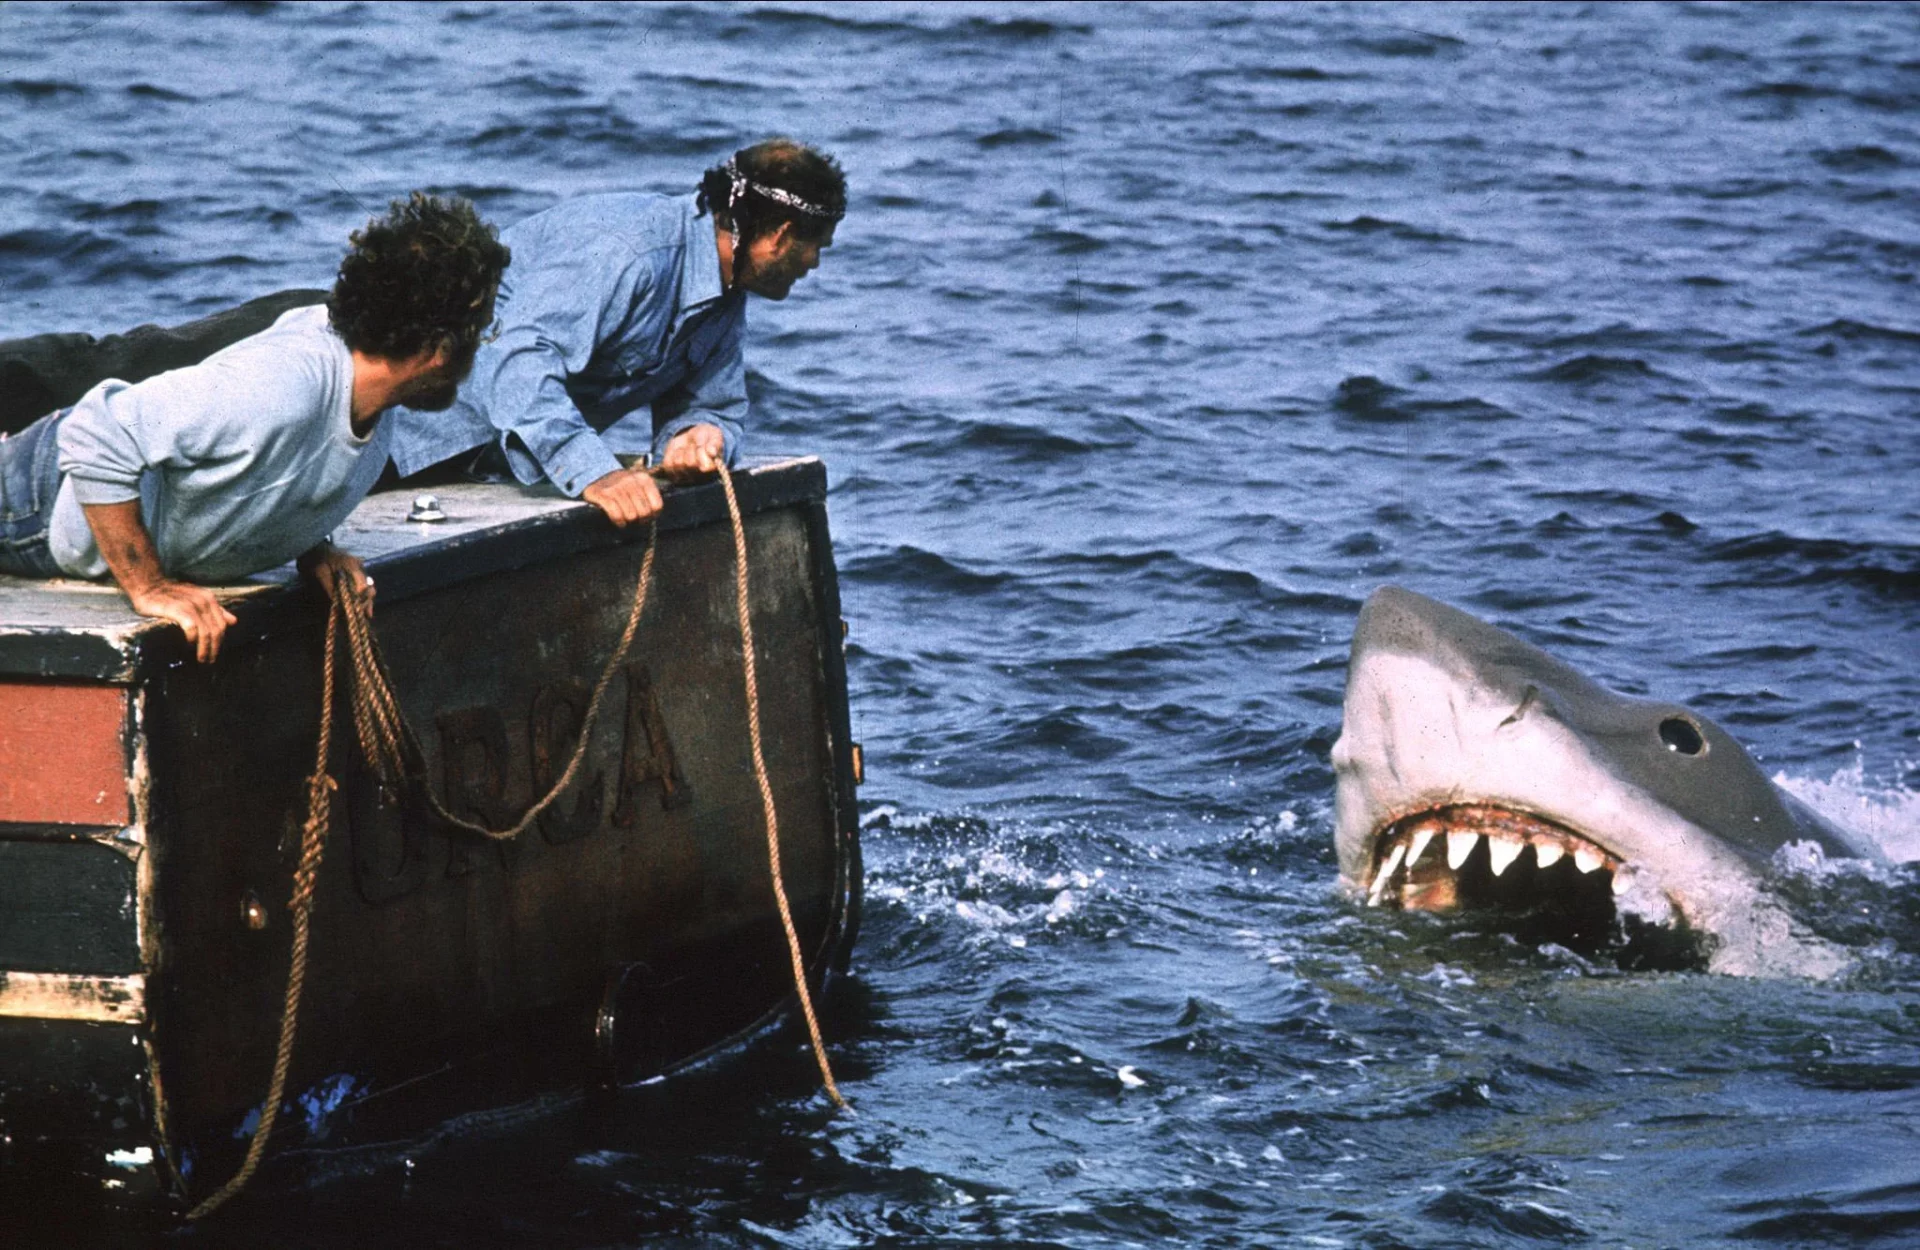 Best Shark Movies: Jaws (1975)